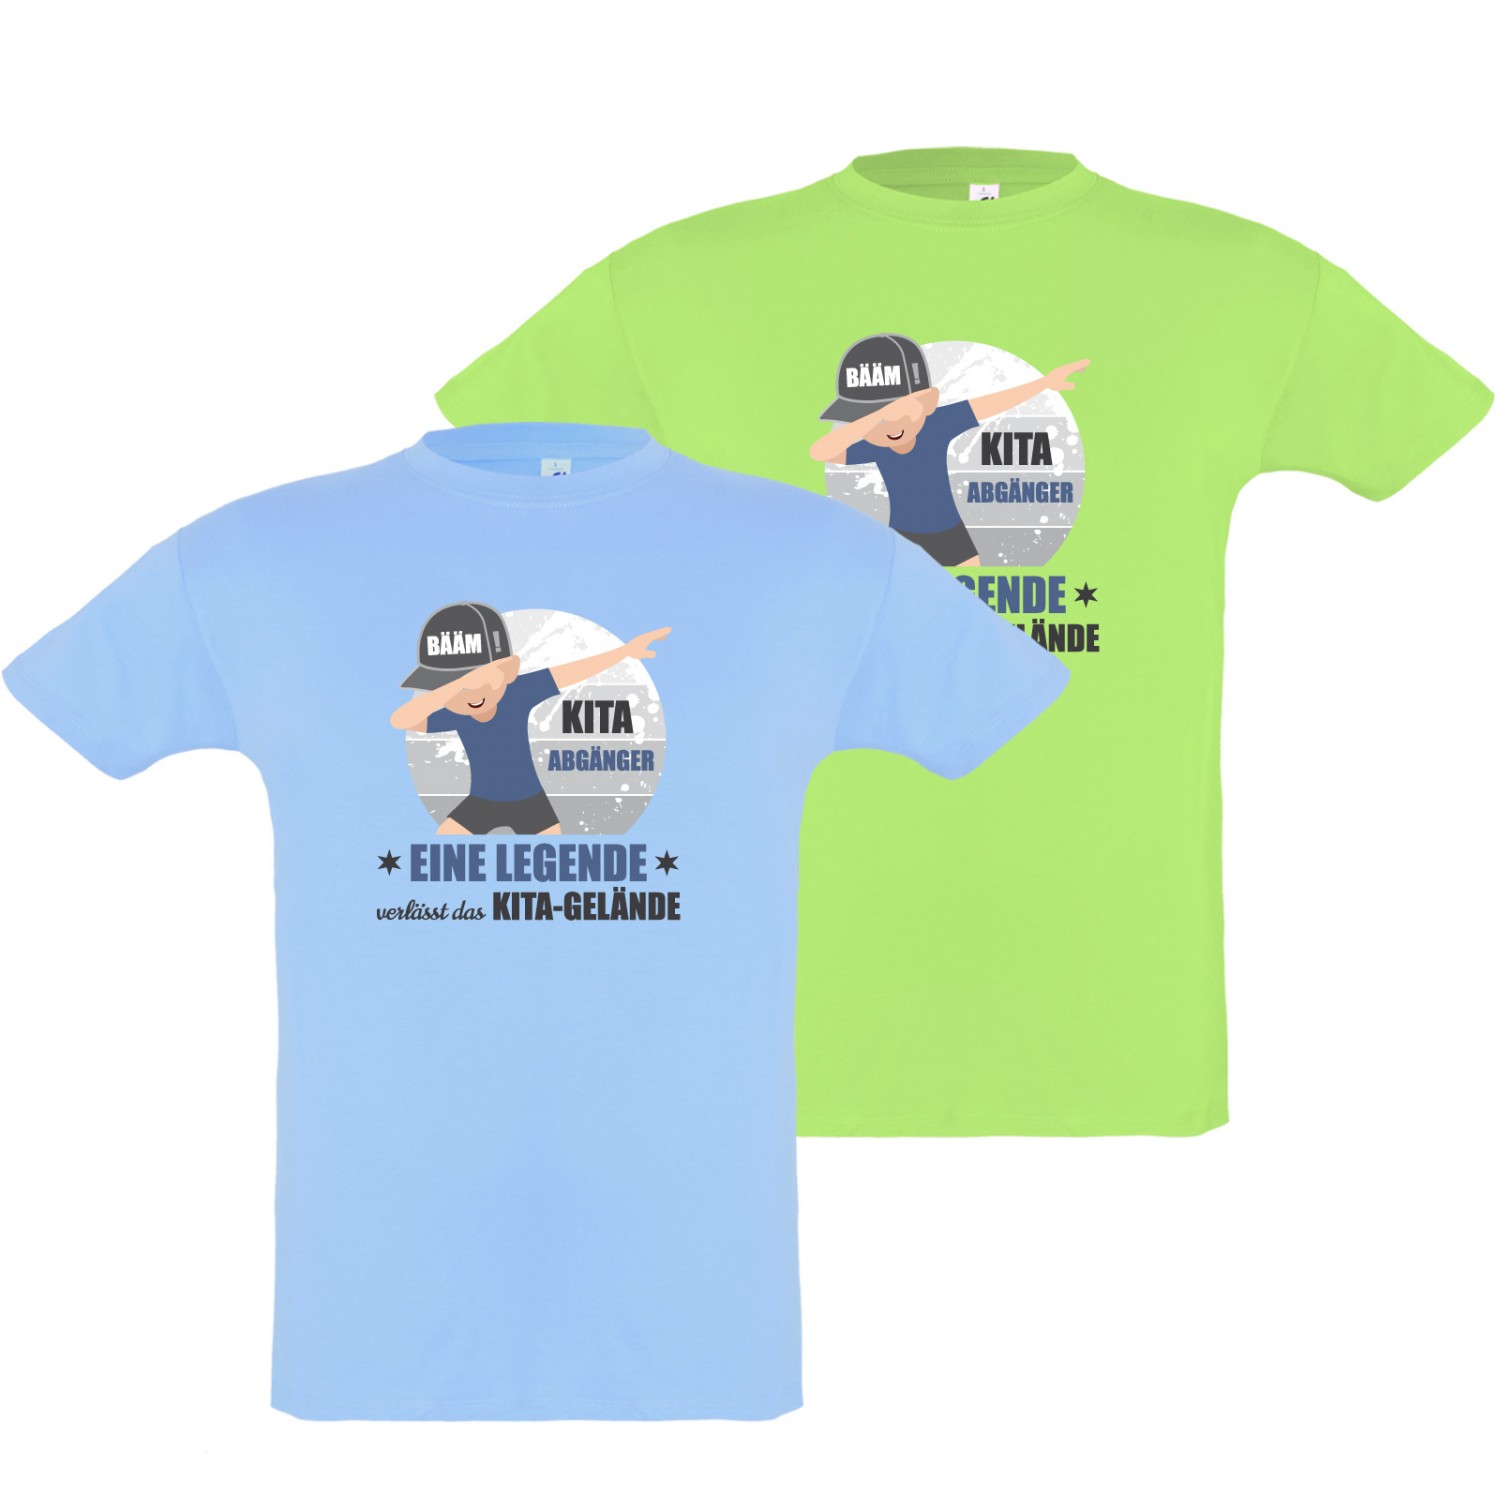 1. Foto T-Shirt Kita Jungs Abgänger Legende Shirt Kindegarten (Farbe: skyblau Größe: 118/128)